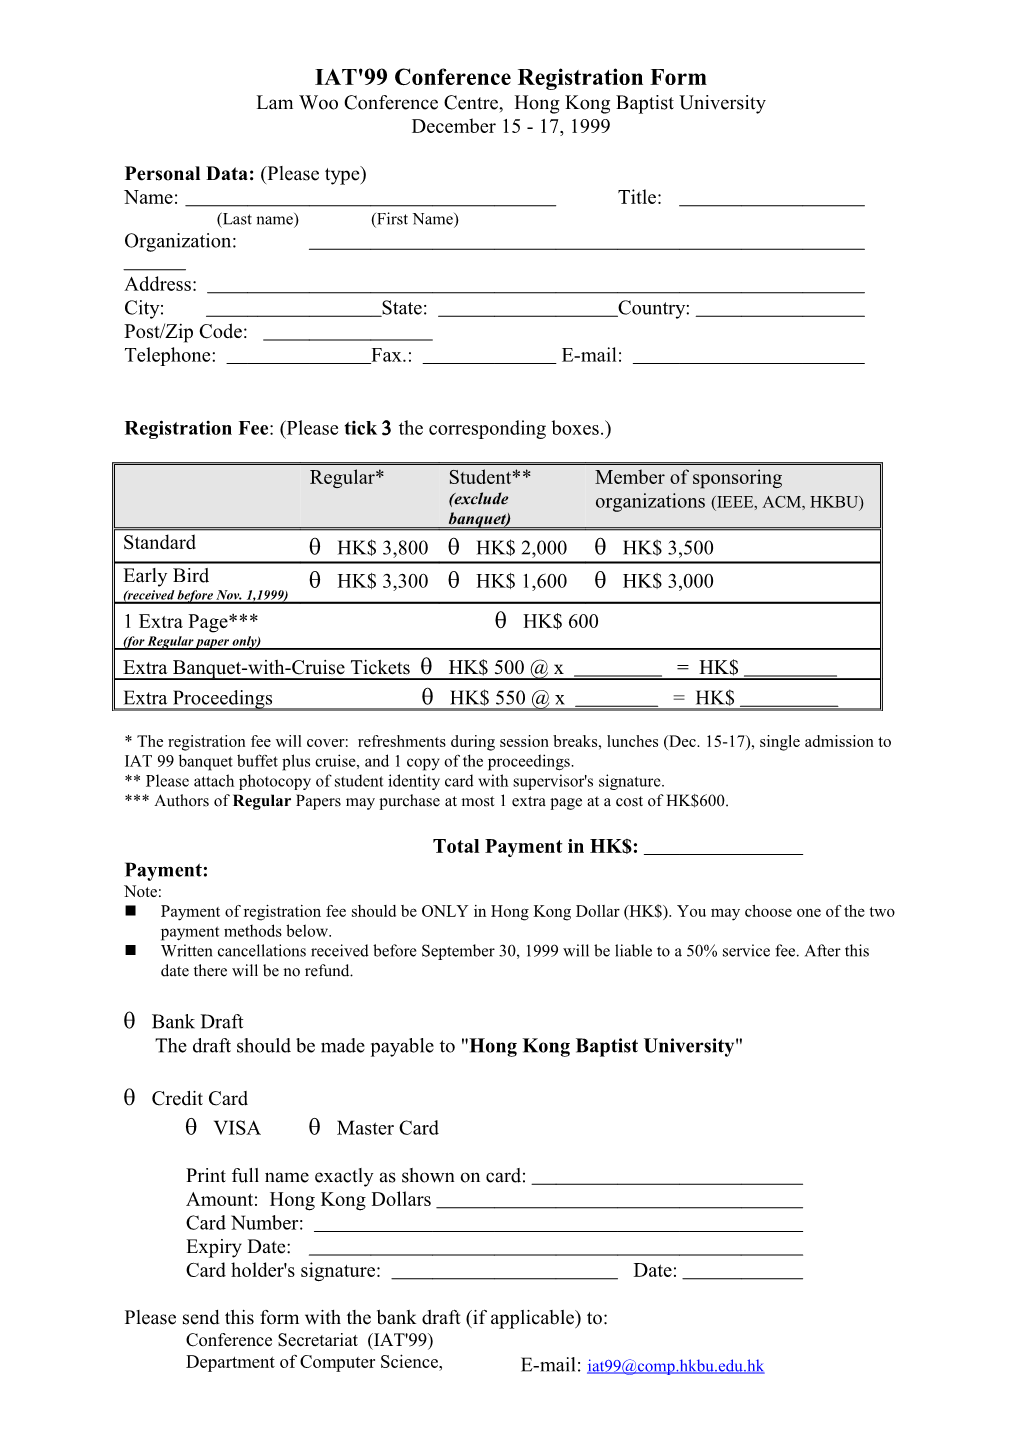 IAT'99 Registration Form